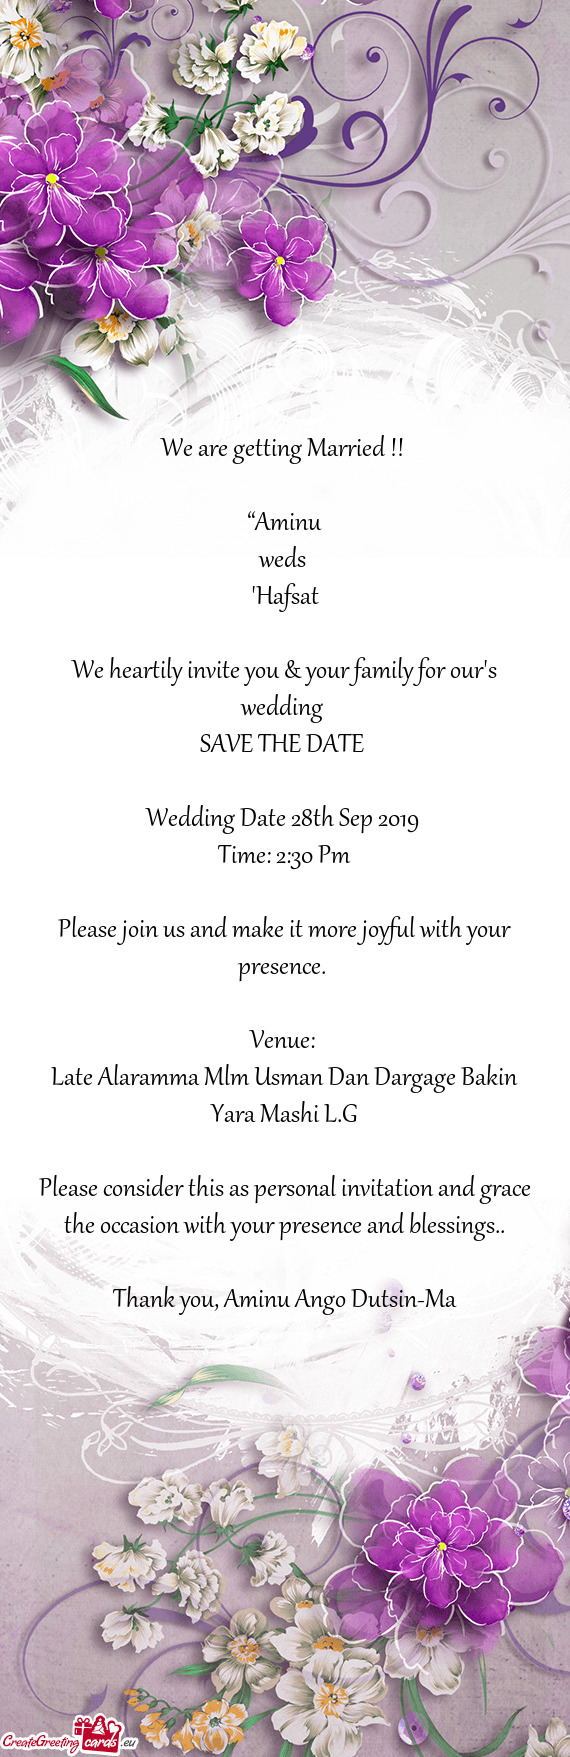 Wedding Date 28th Sep 2019